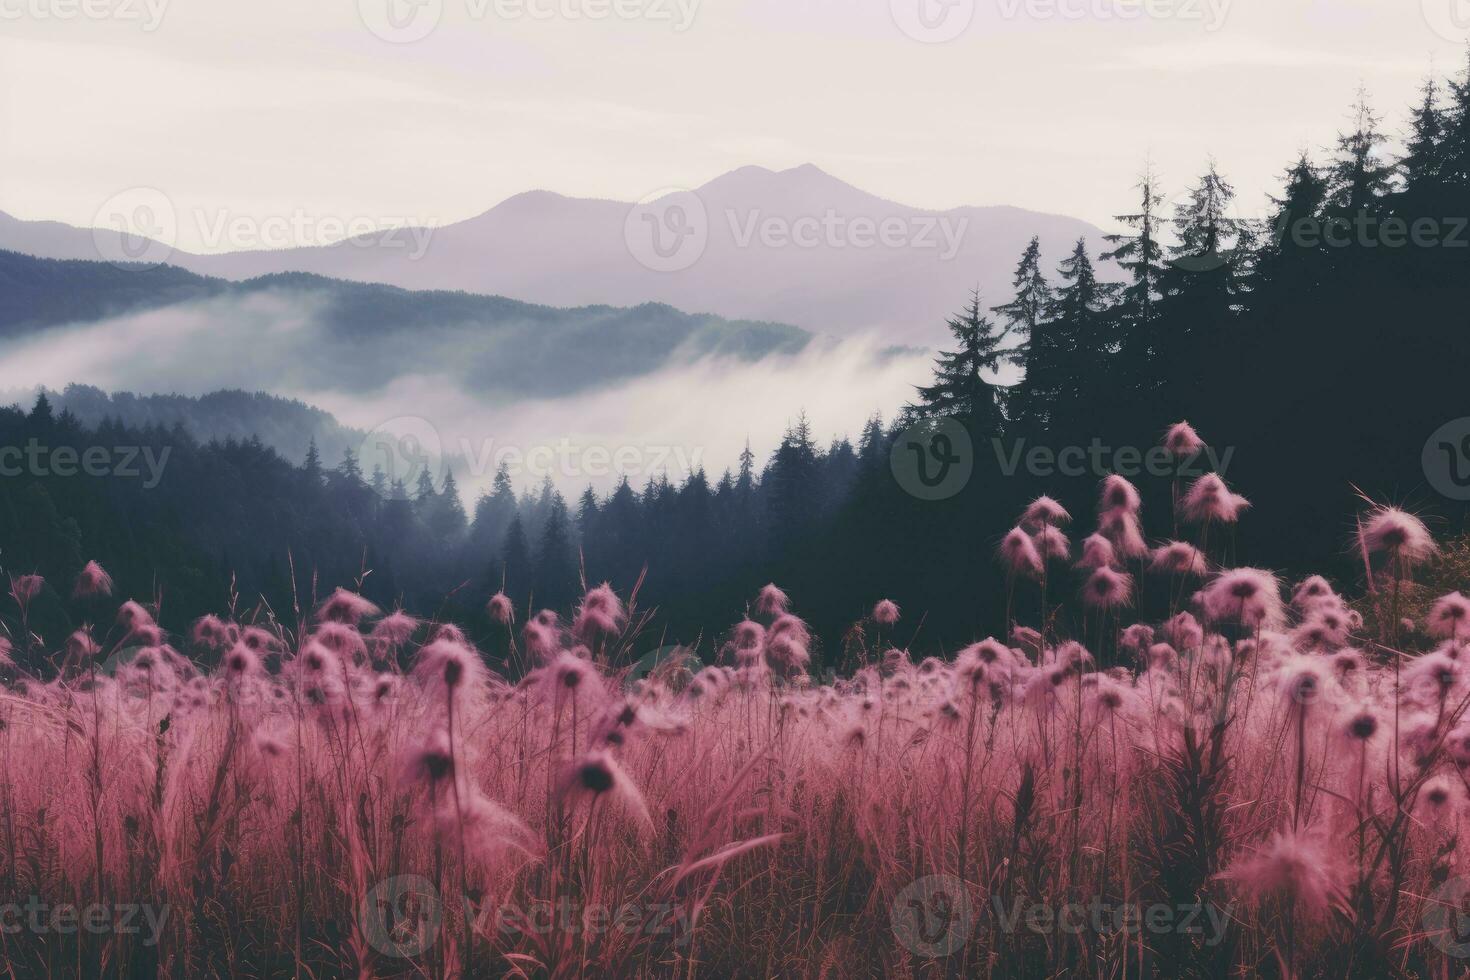 field wind grass moody wild peaceful landscape freedom scene beautiful nature wallpaper photo